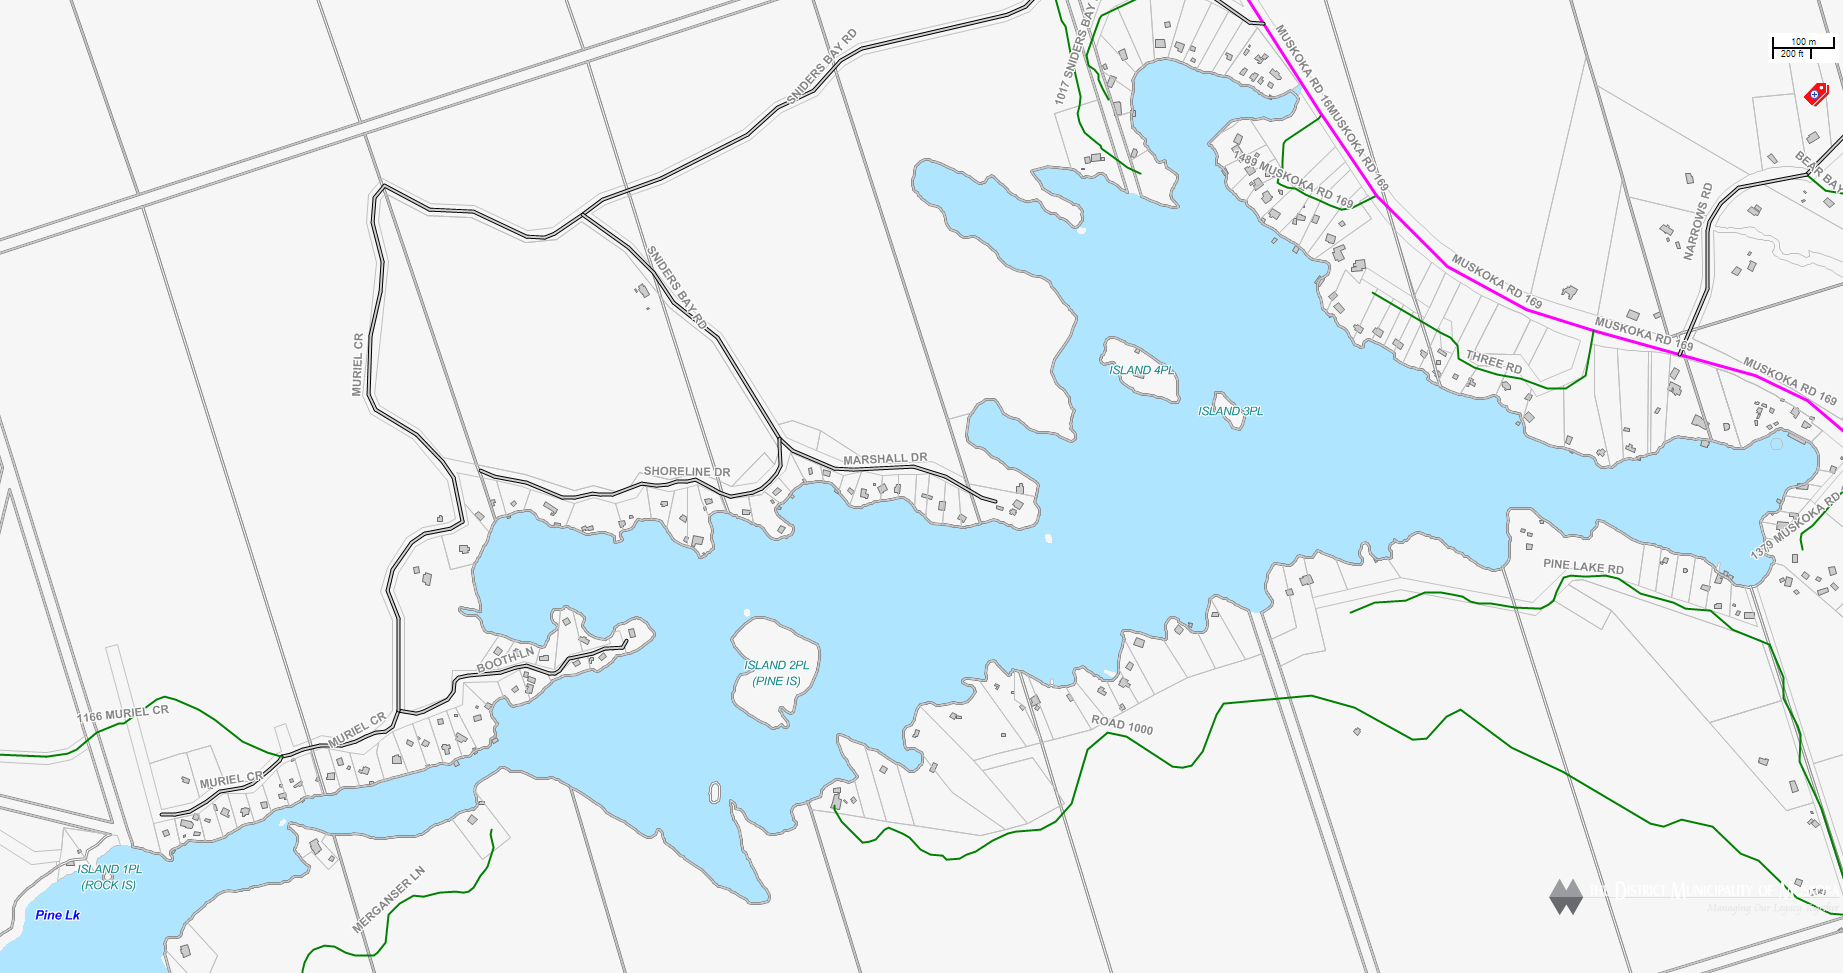 Pigeon Lake Cadastral Map - Pigeon Lake - Muskoka